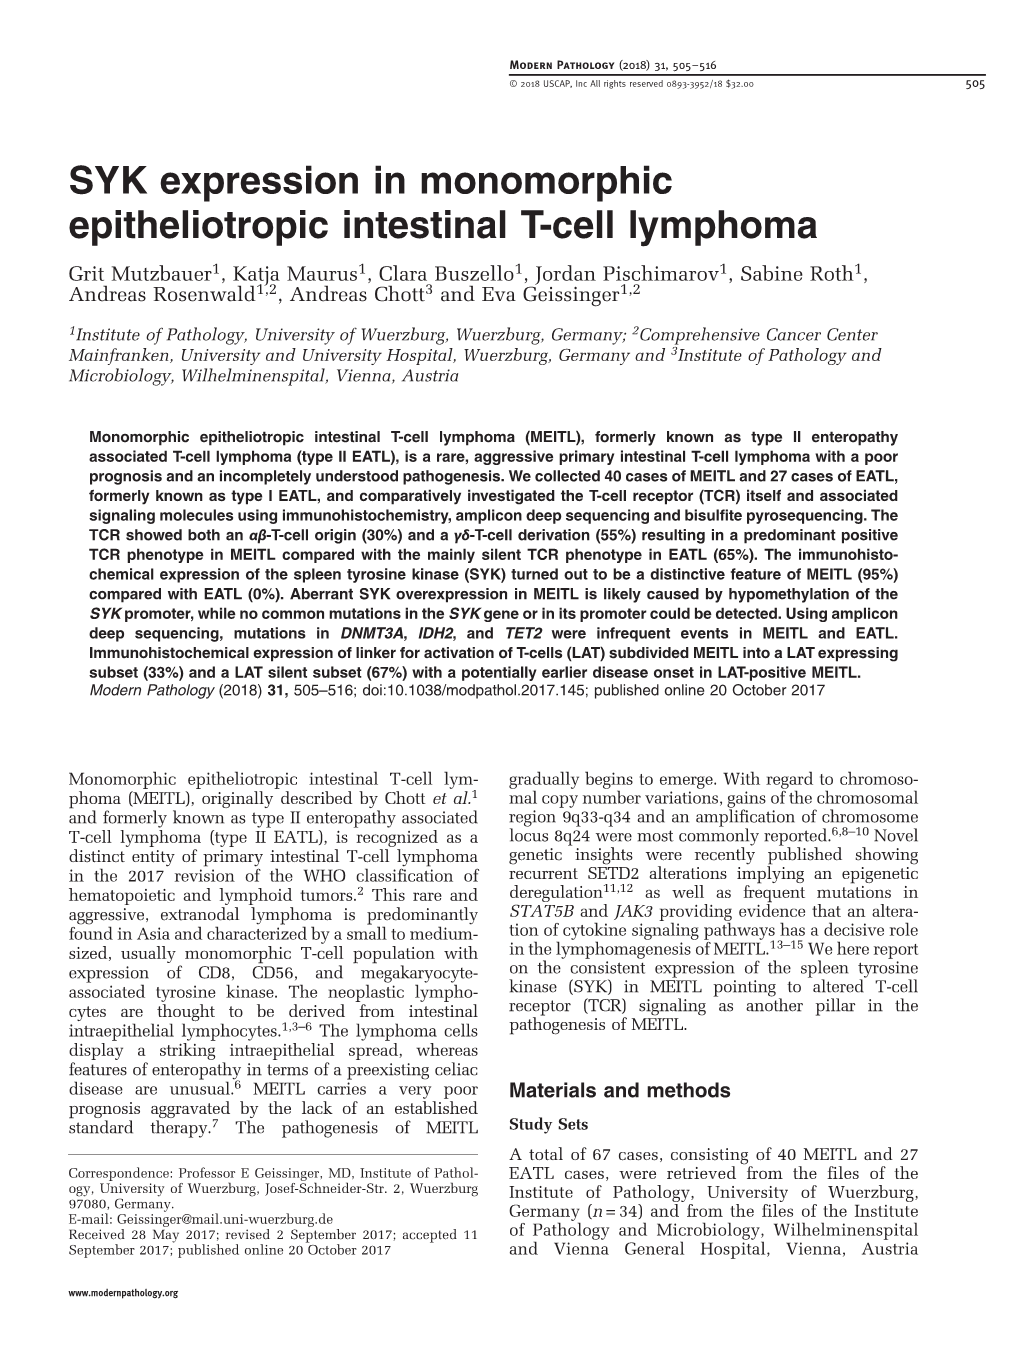 SYK Expression in Monomorphic Epitheliotropic Intestinal T-Cell